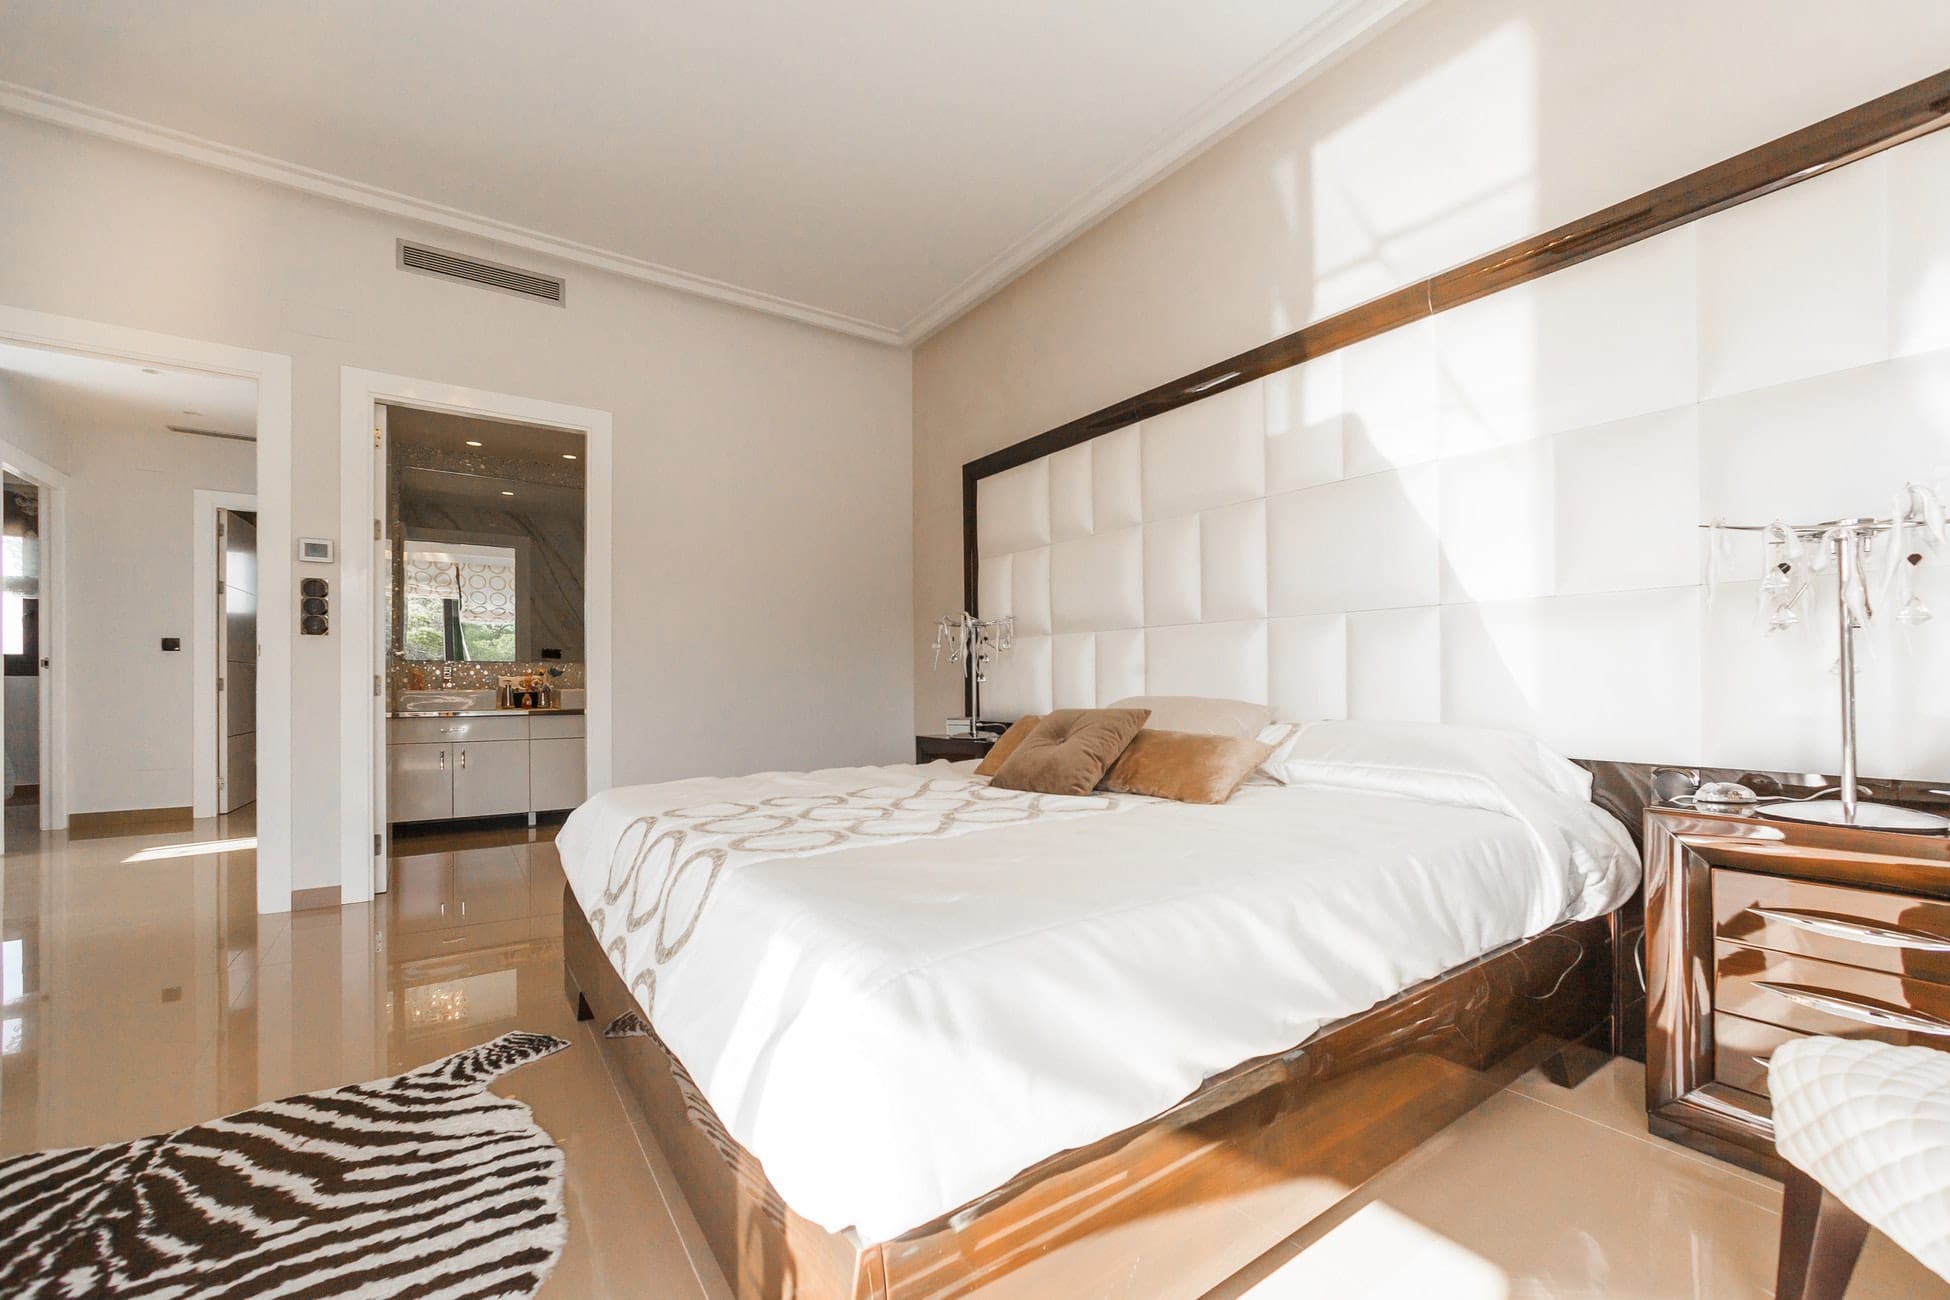 Jaspal Home brings an aura of zen to your bedroom